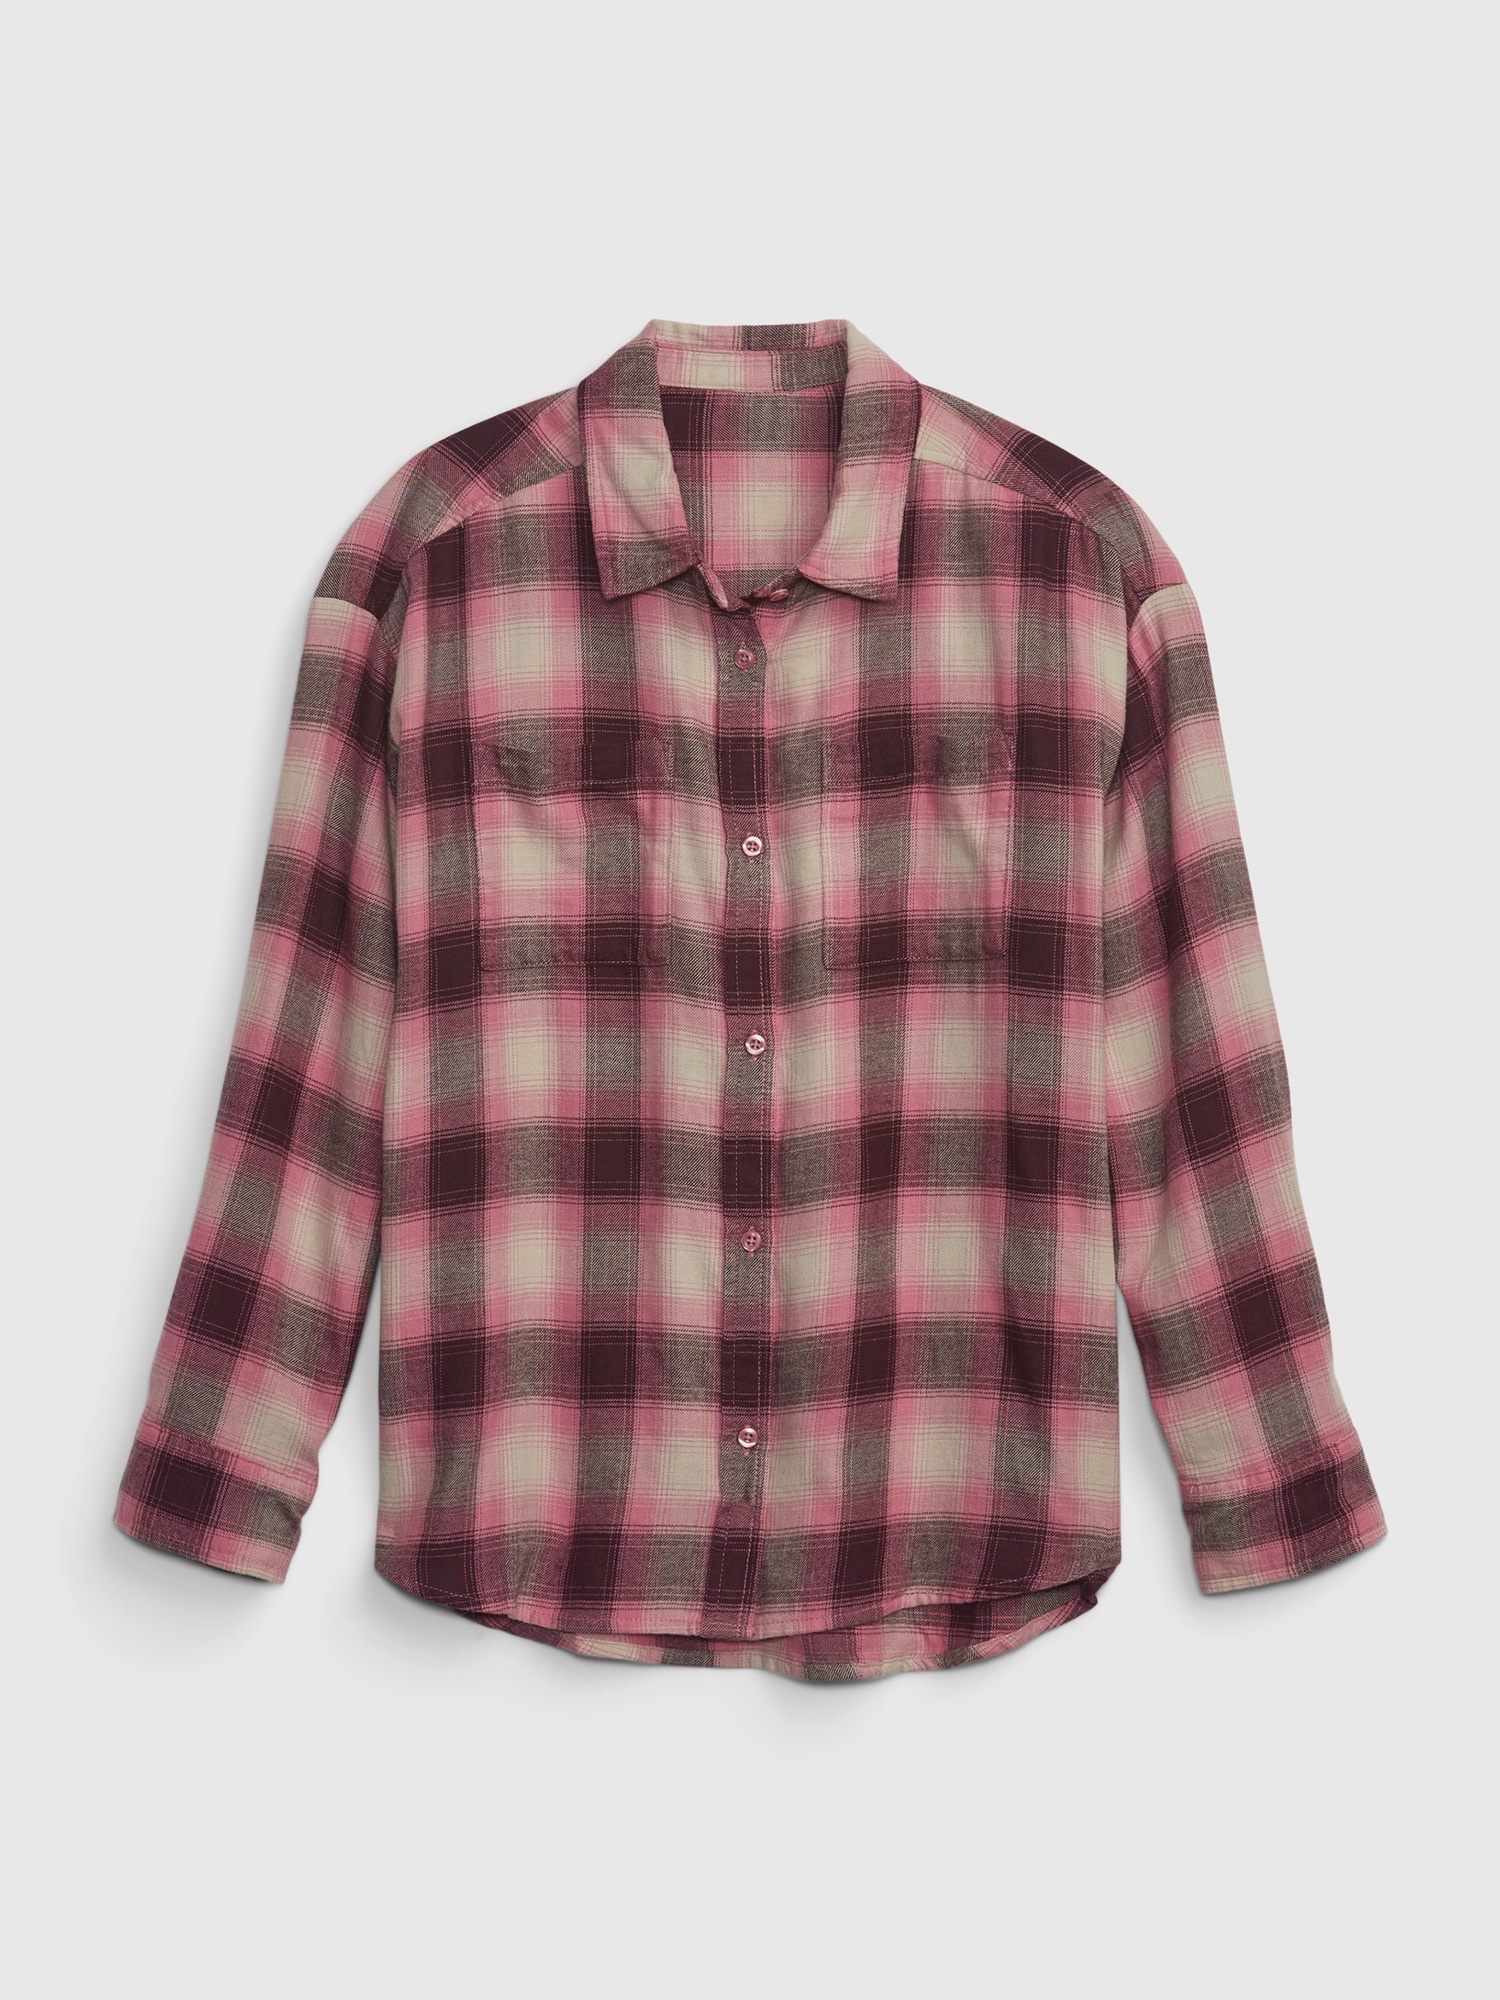 Kids Flannel Shirt | Gap